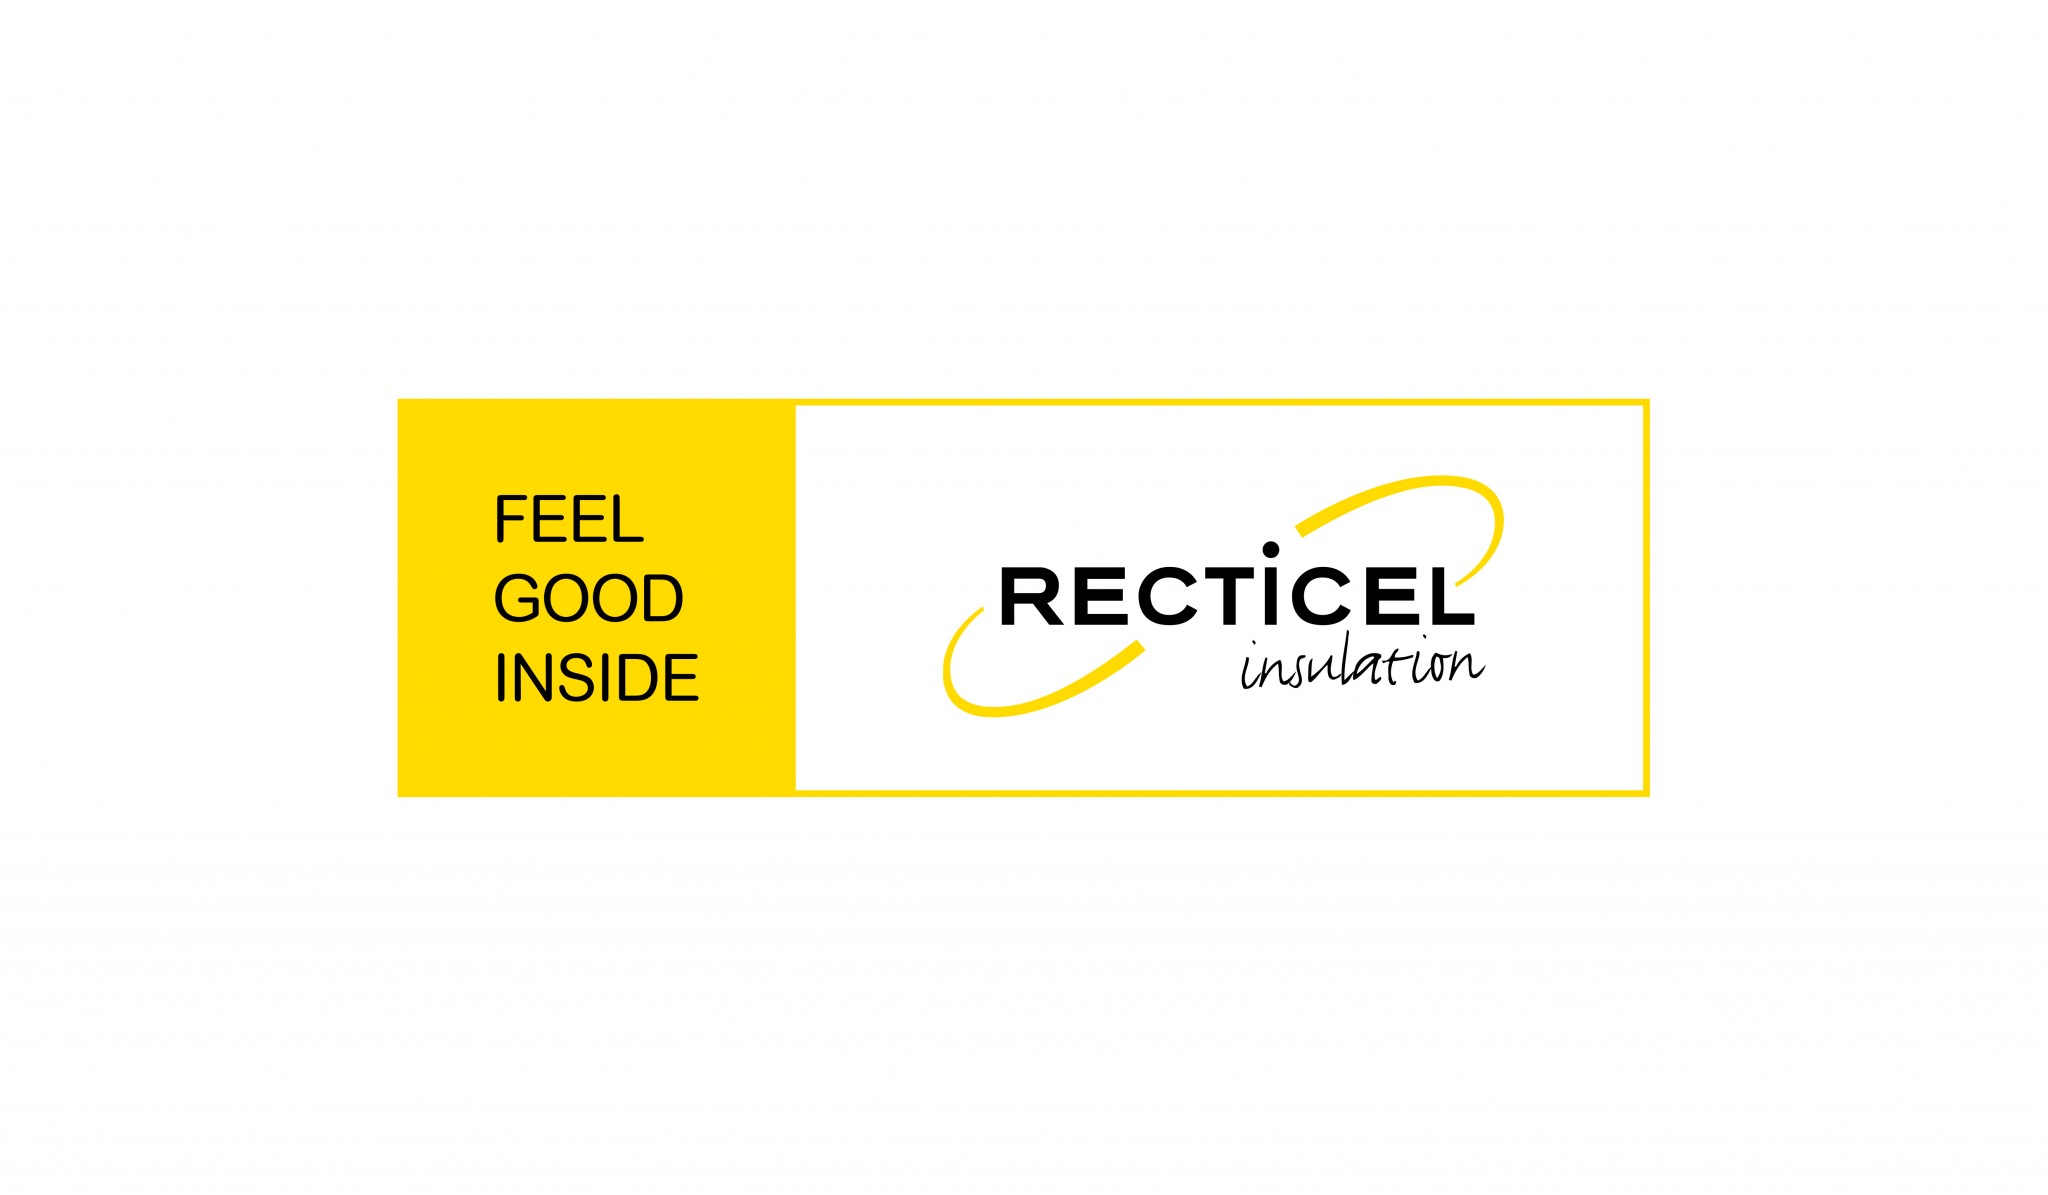 logo Recticel